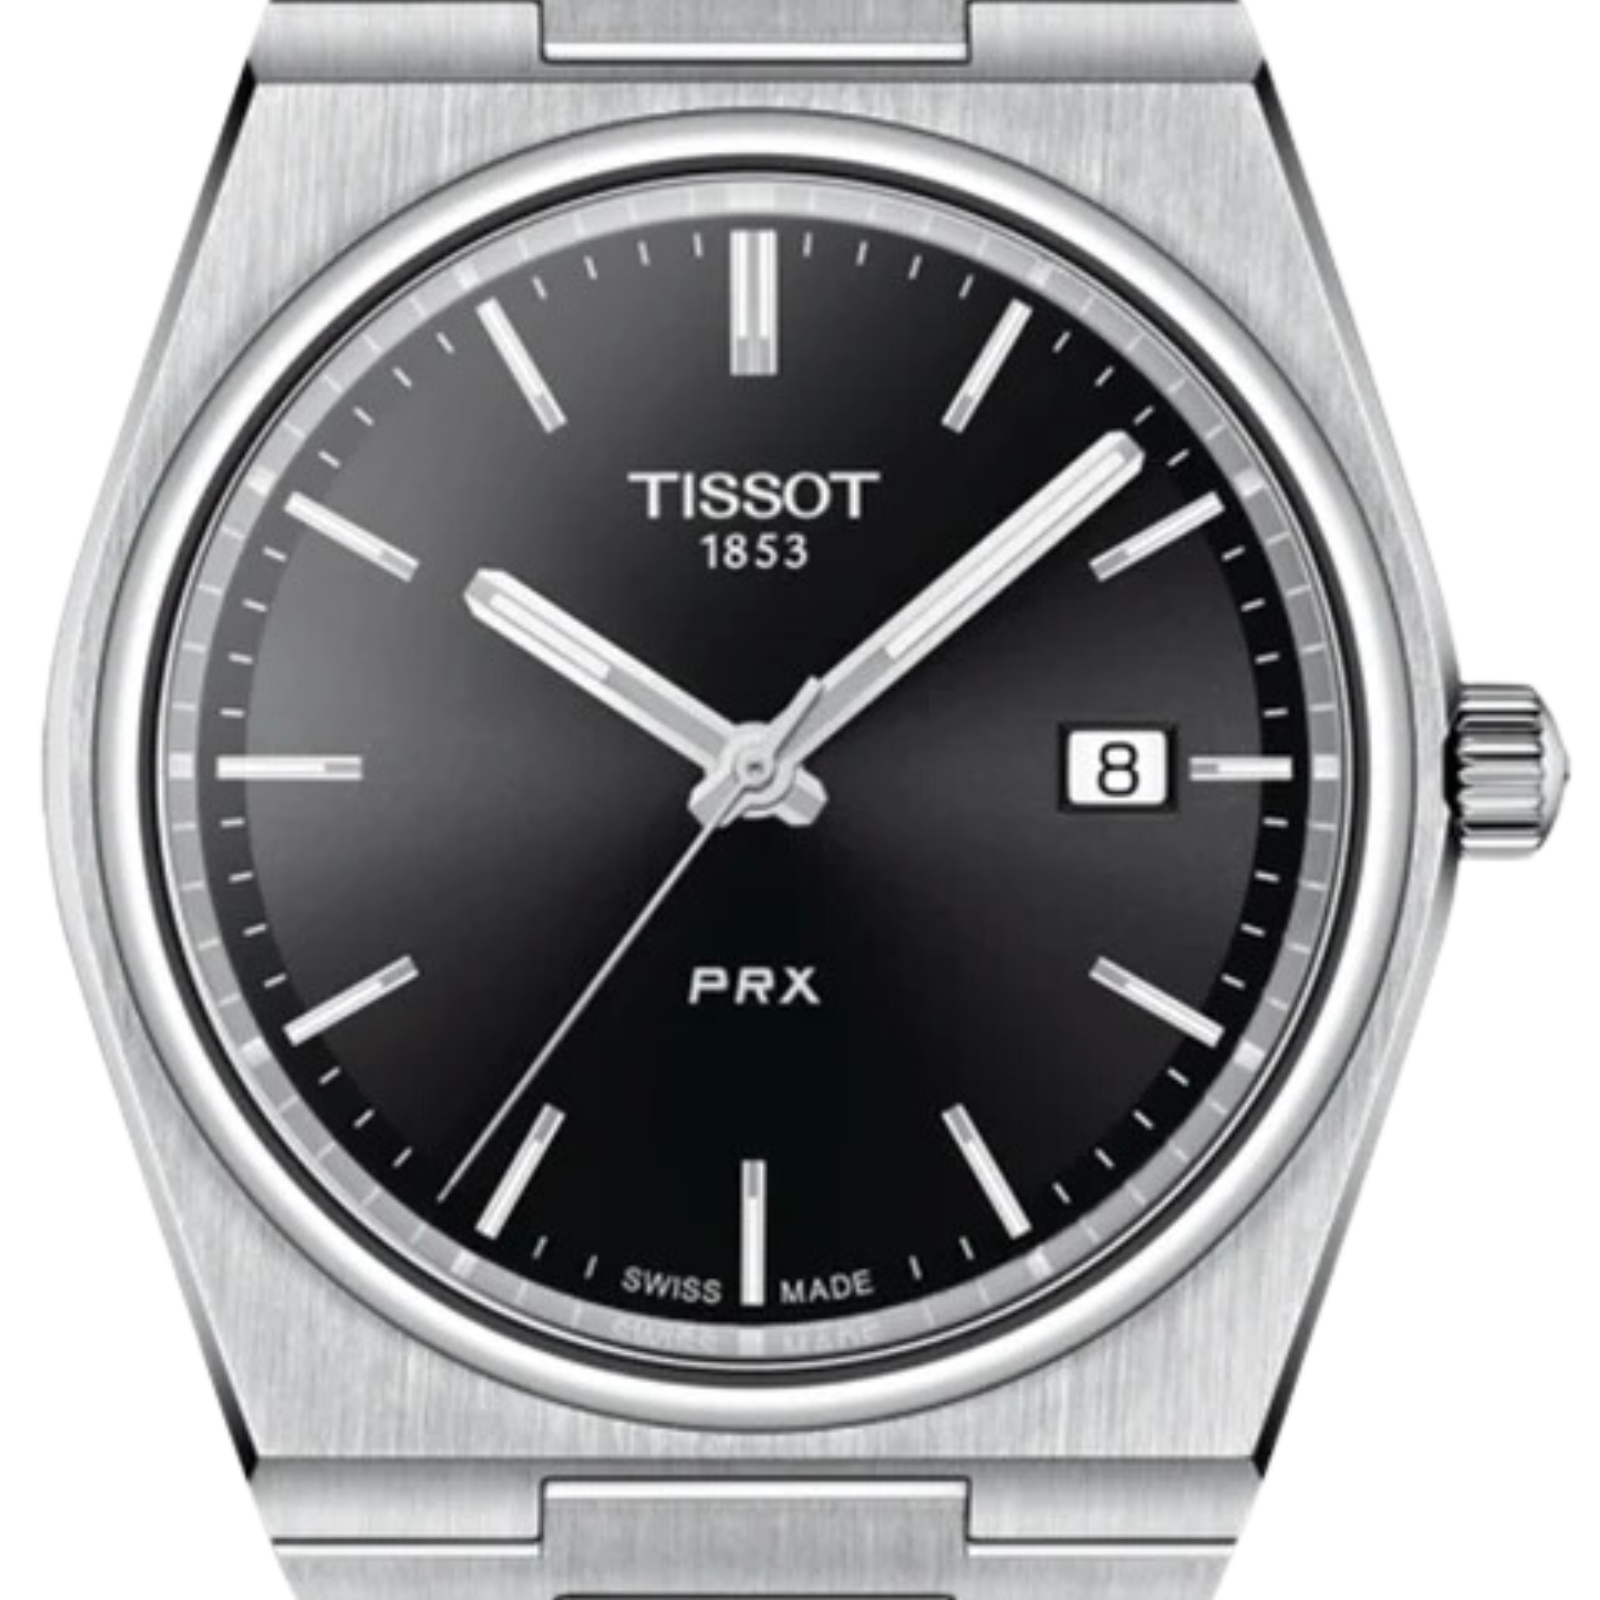 Tissot 1853 PRX Quartz T1374101105100 T137.410.11.051.00 Black Dial Dress Watch - Skywatches